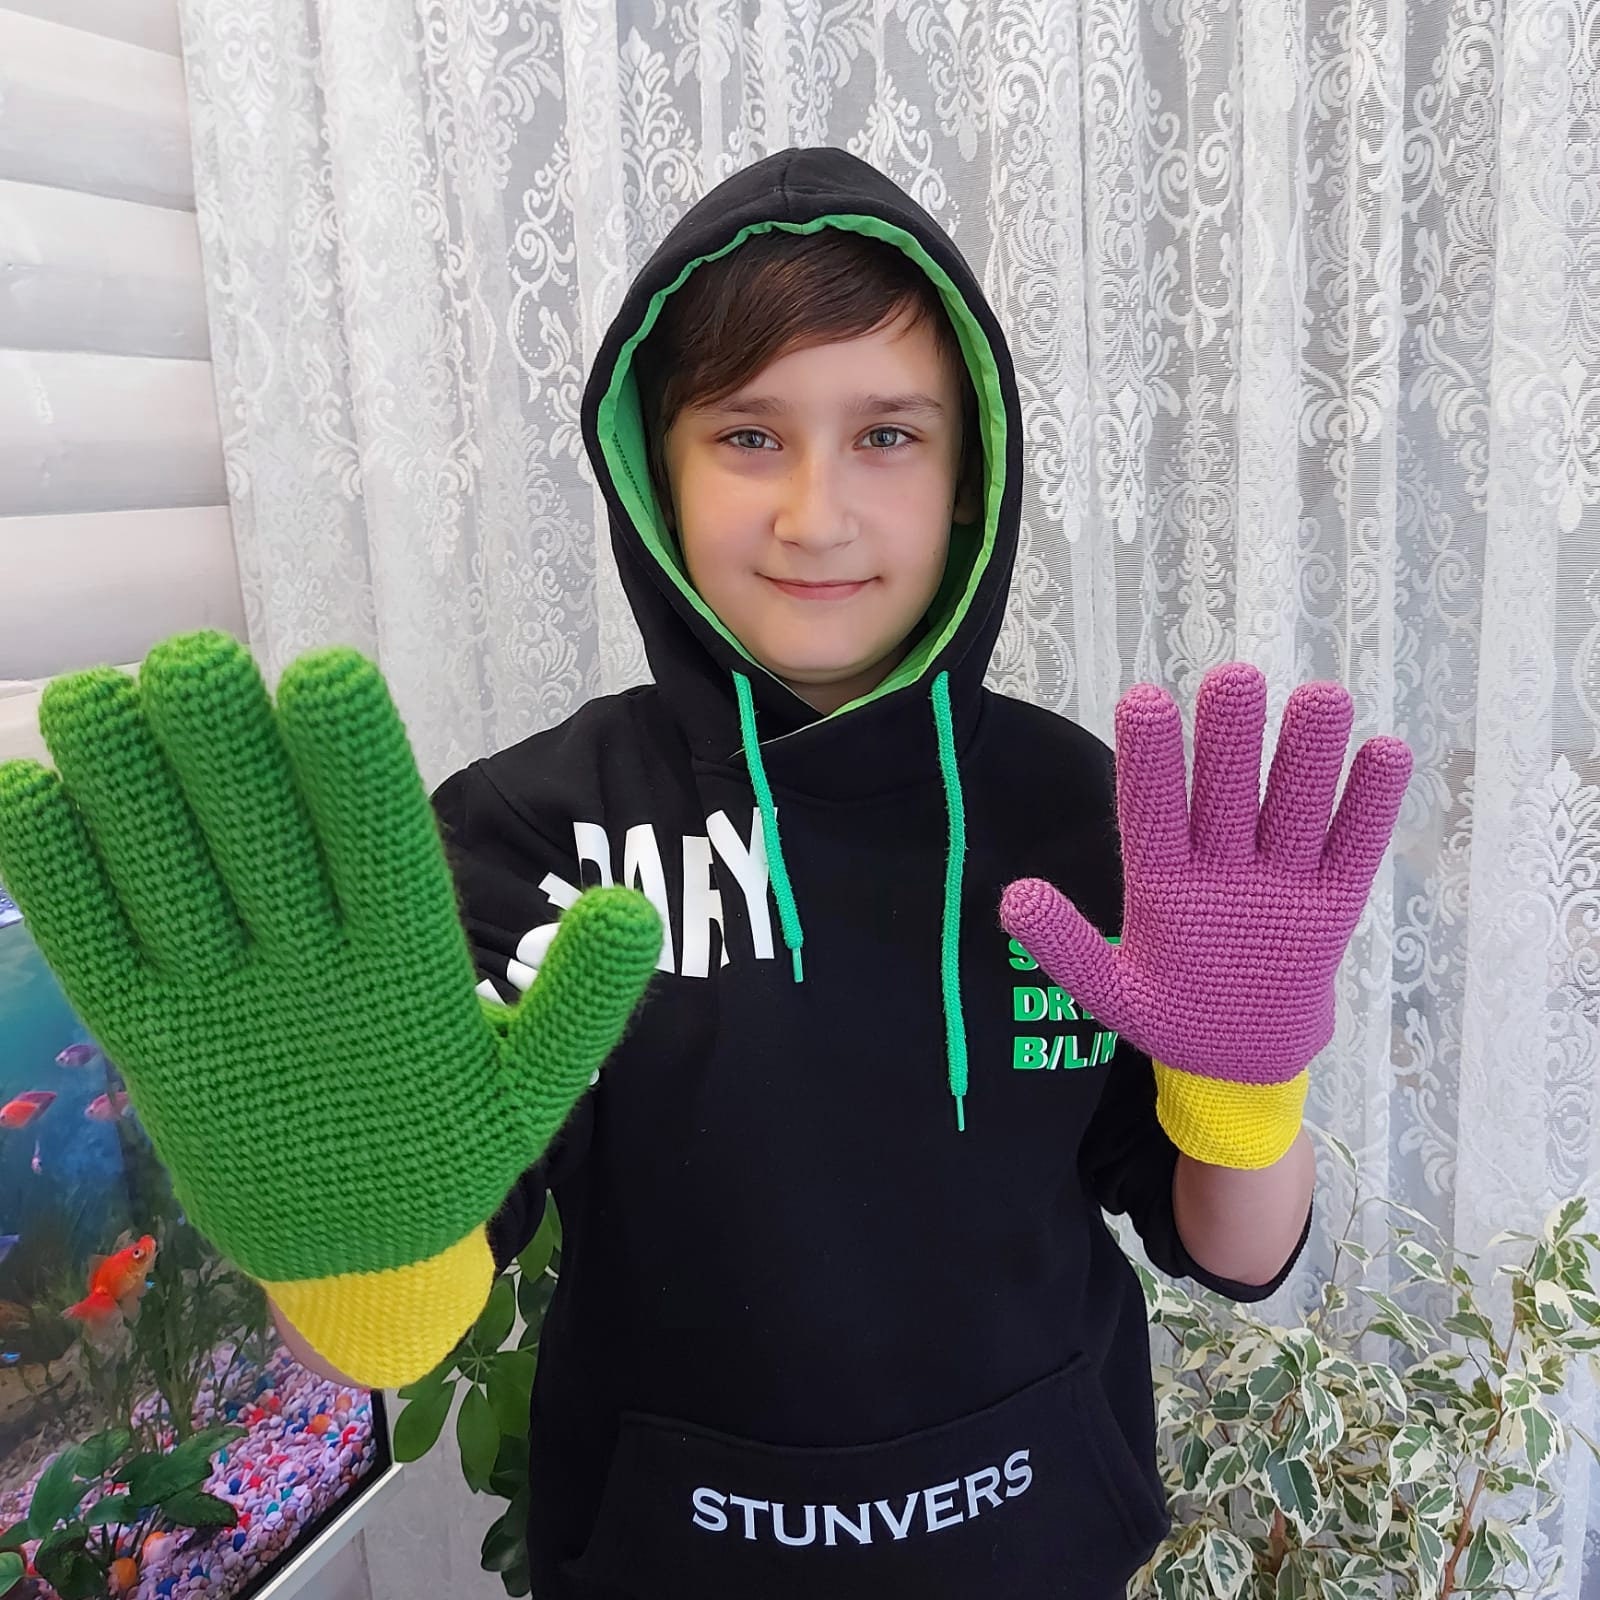 Poppy Playtime Gloves, Huggy Wuggy Сosplay, Bunzo Bunny, Player Plush,  Gamer Gift - Yahoo Shopping